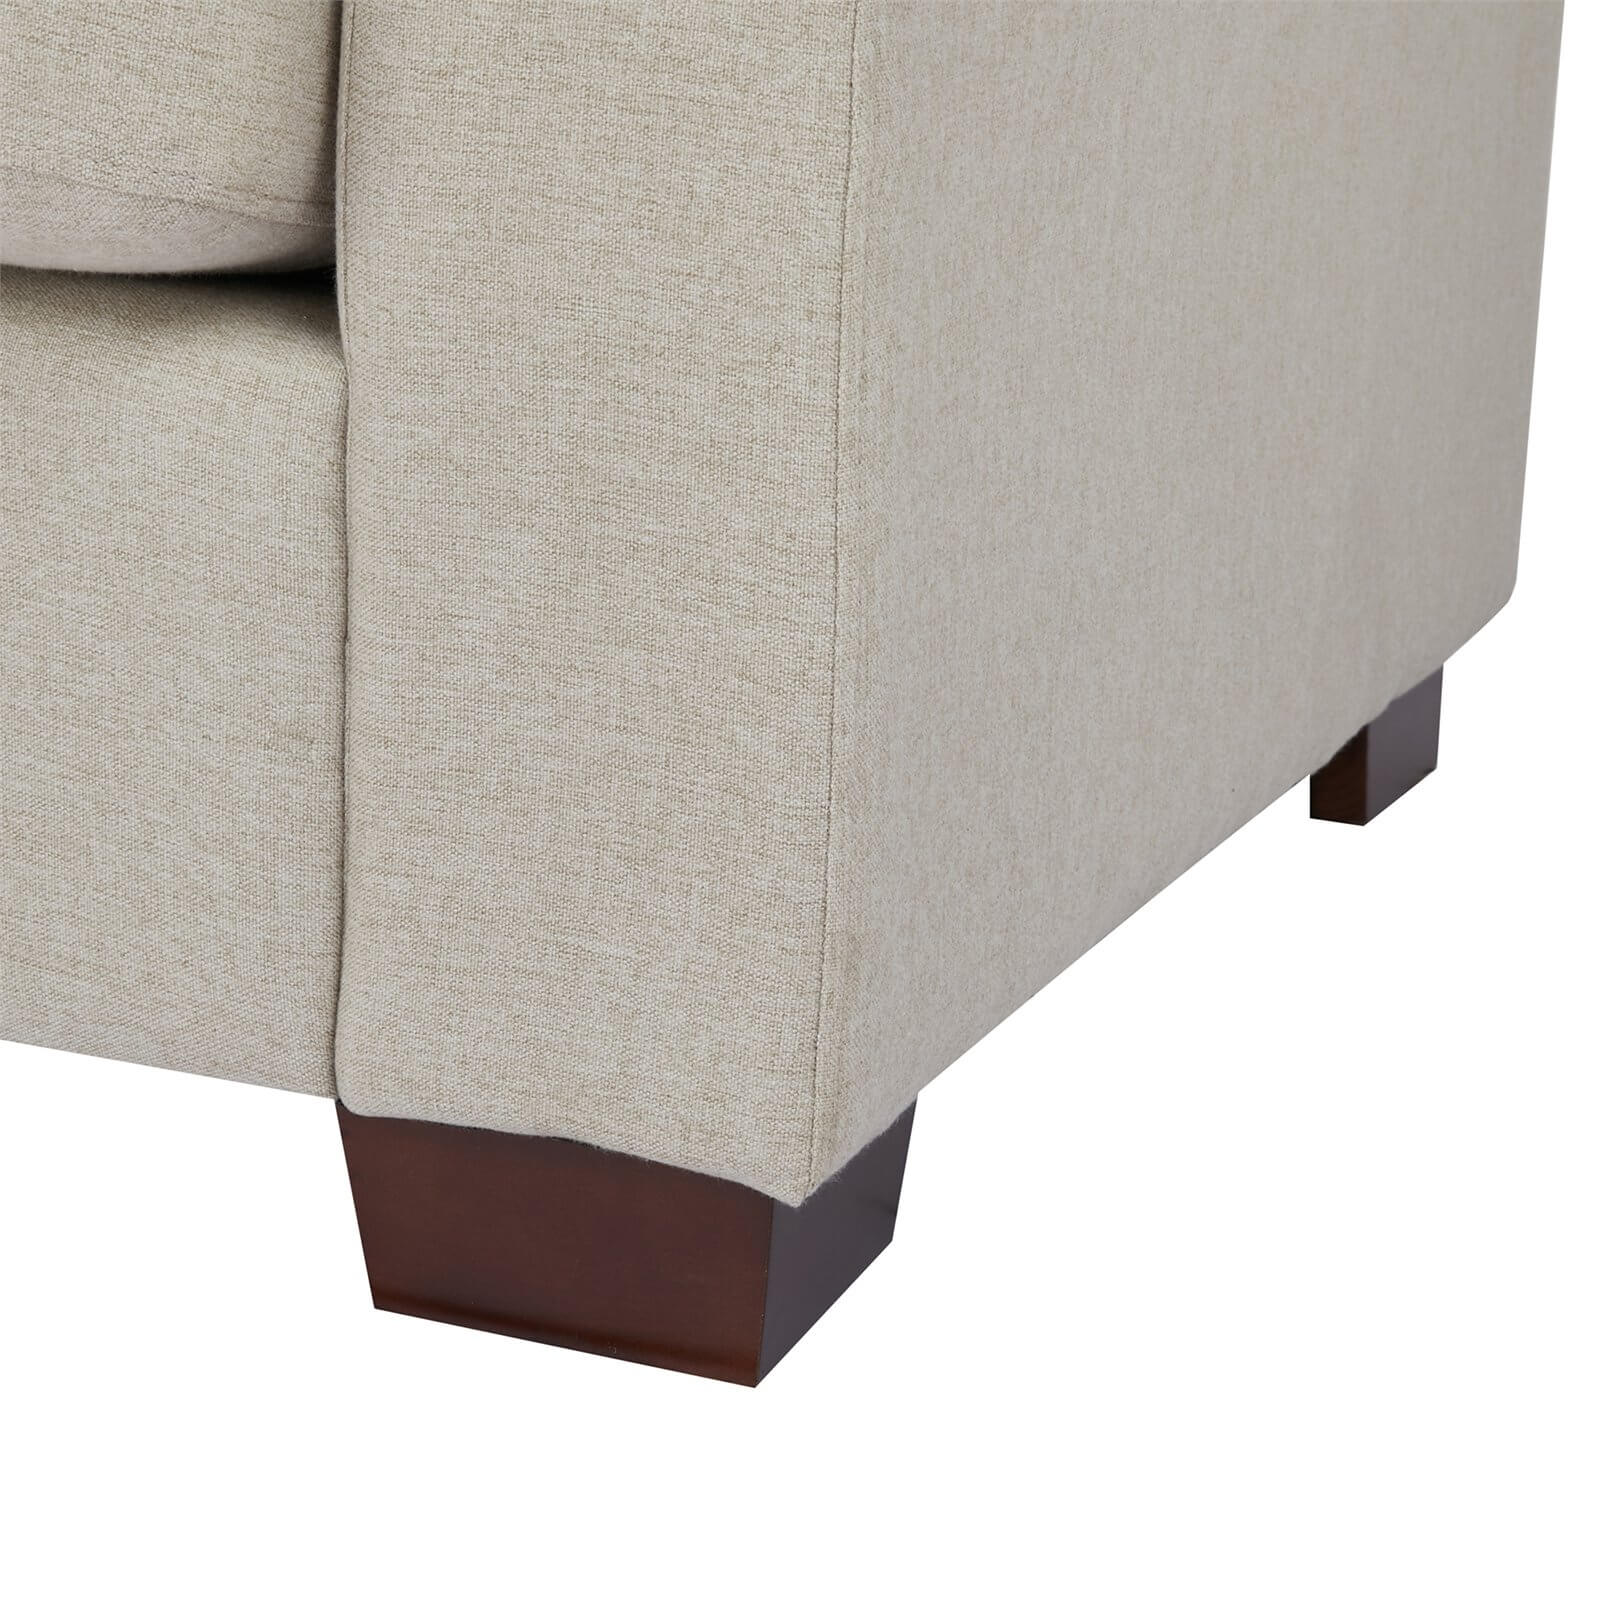 Hayley 3 Seater Sofa - Natural Linen Slub